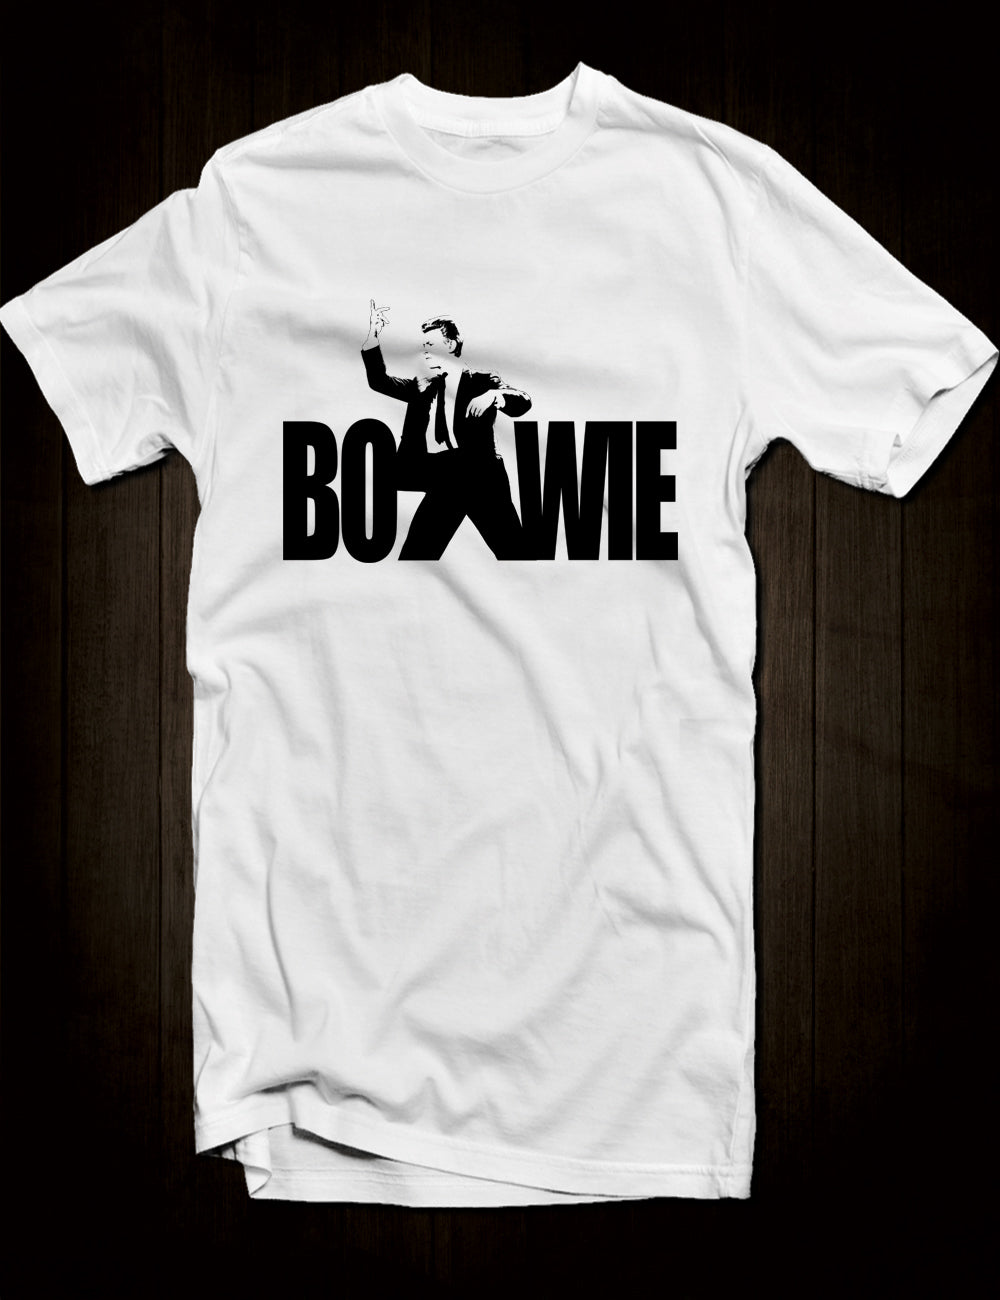 White David Bowie T-Shirt